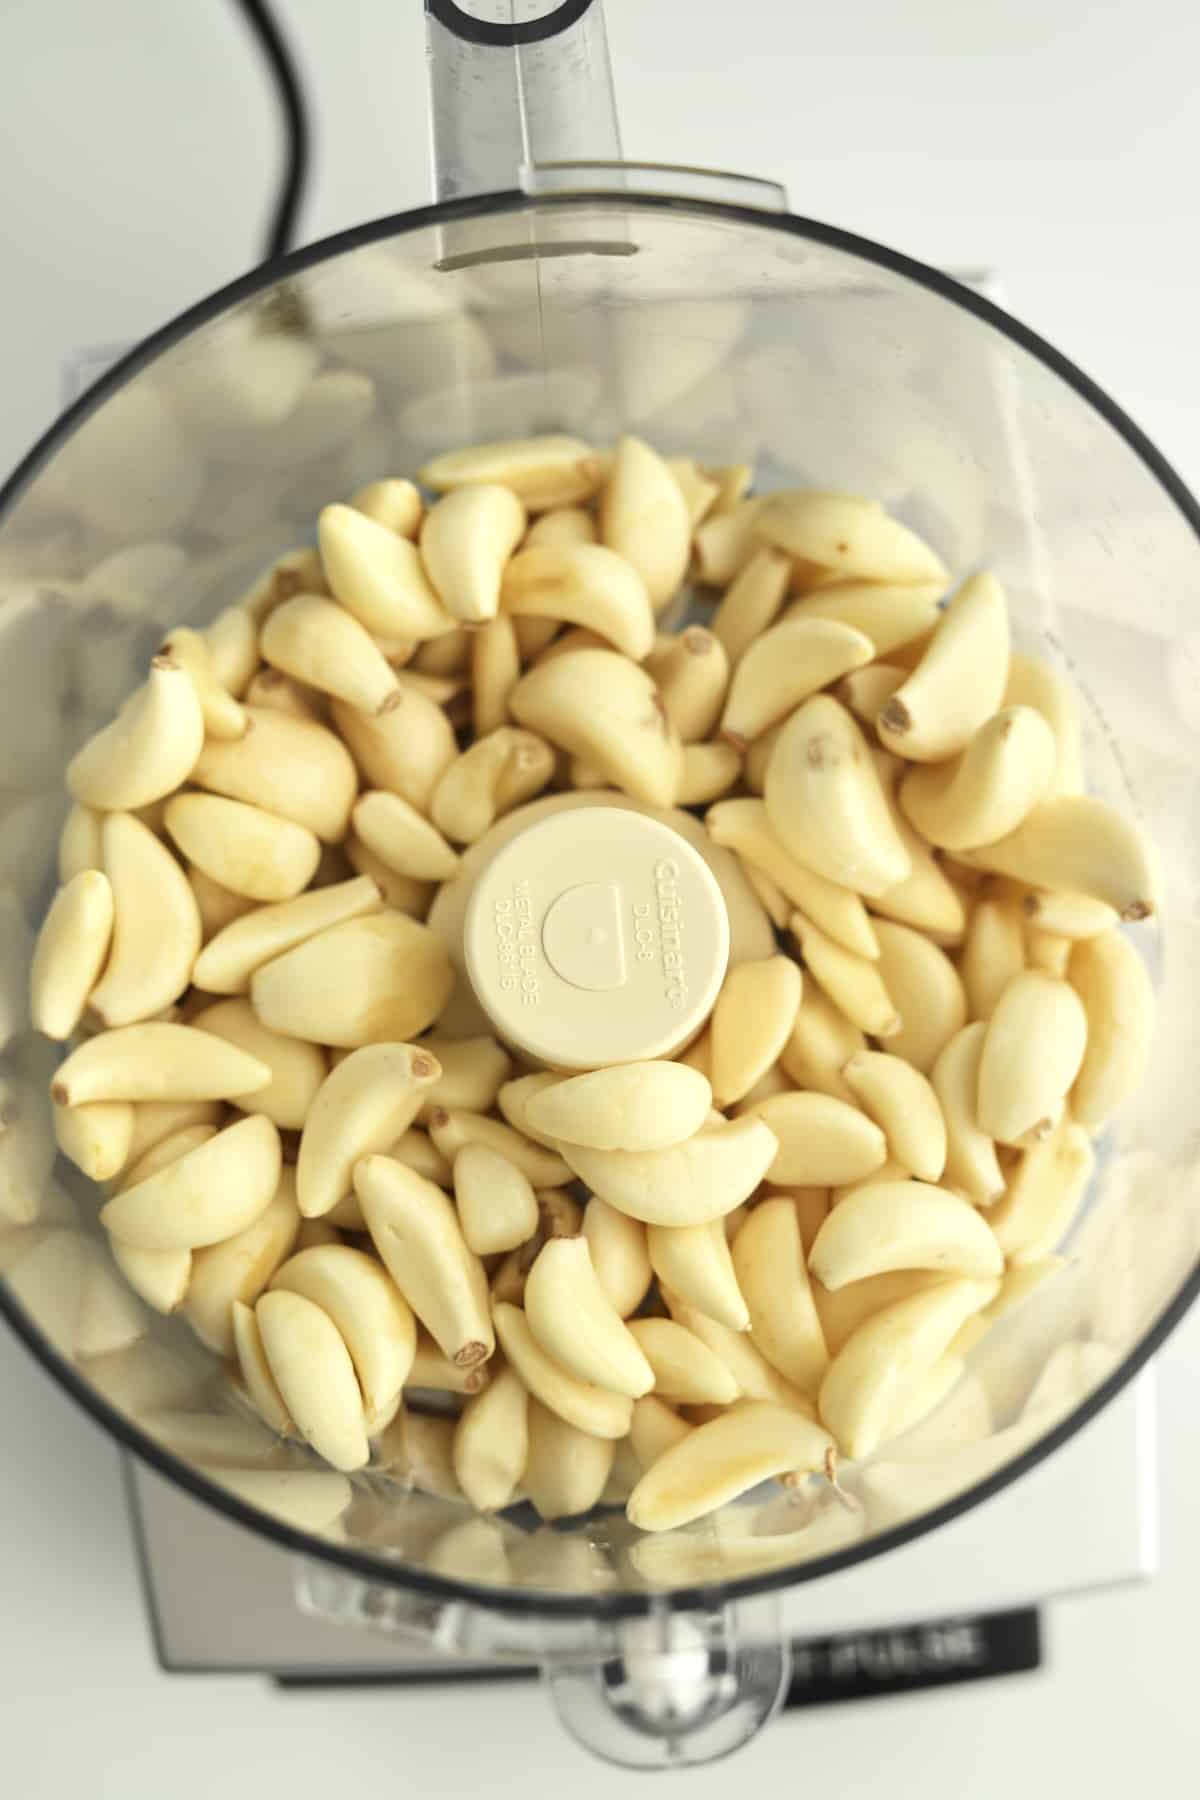 garlic cloves in a food processor